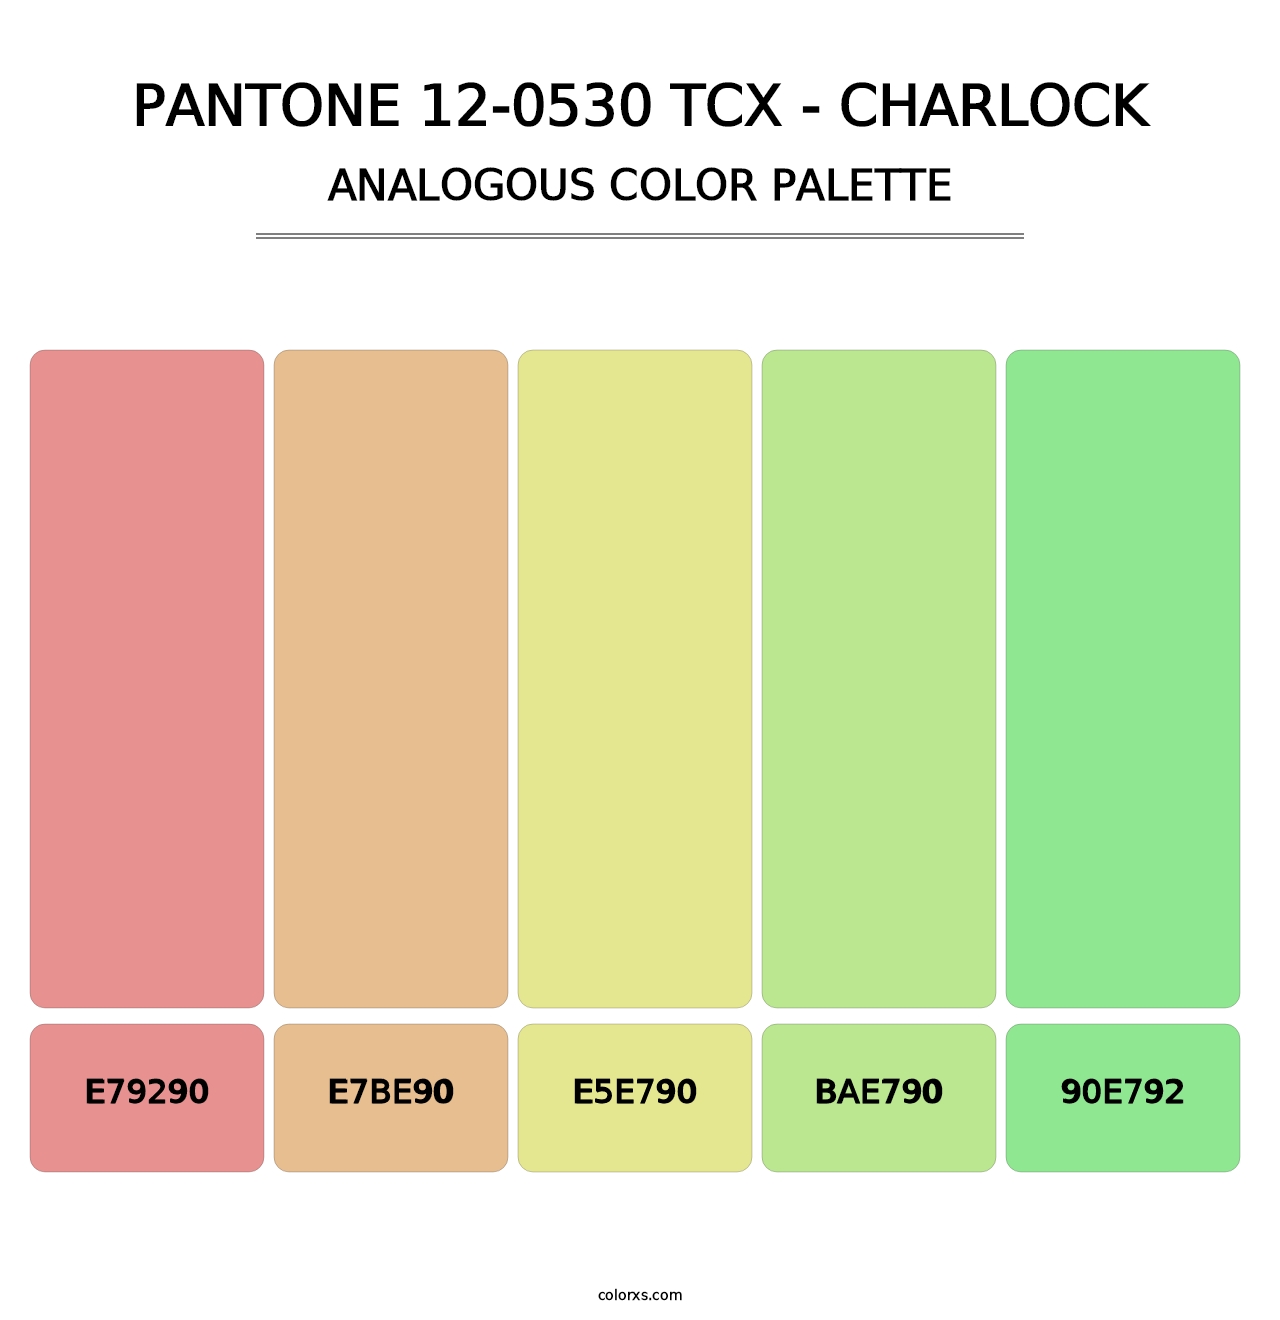 PANTONE 12-0530 TCX - Charlock - Analogous Color Palette